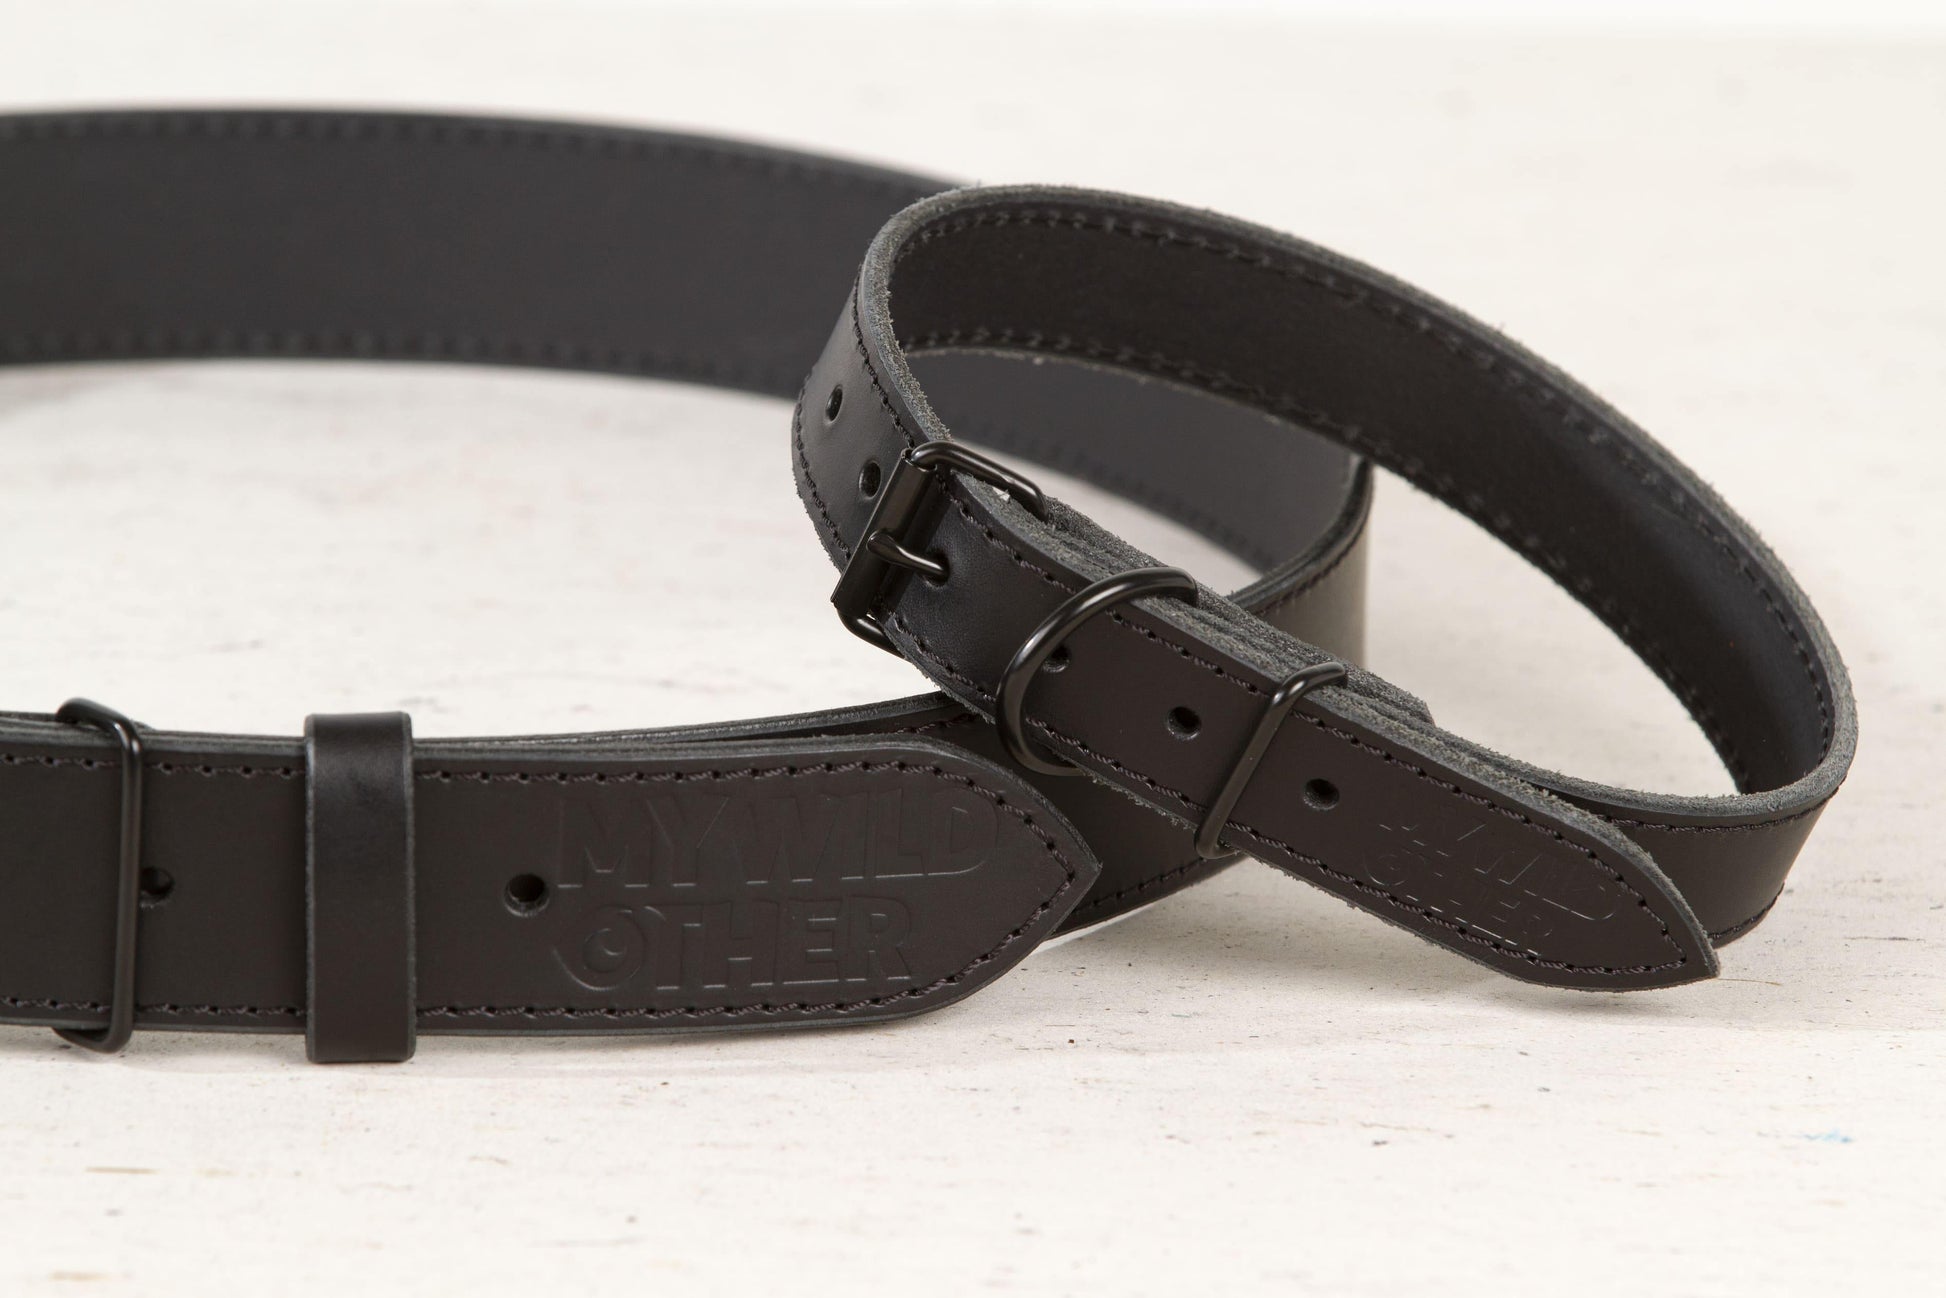 Handmade black leather dog collar - premium dog goods handmade in Europe by My Wild Other